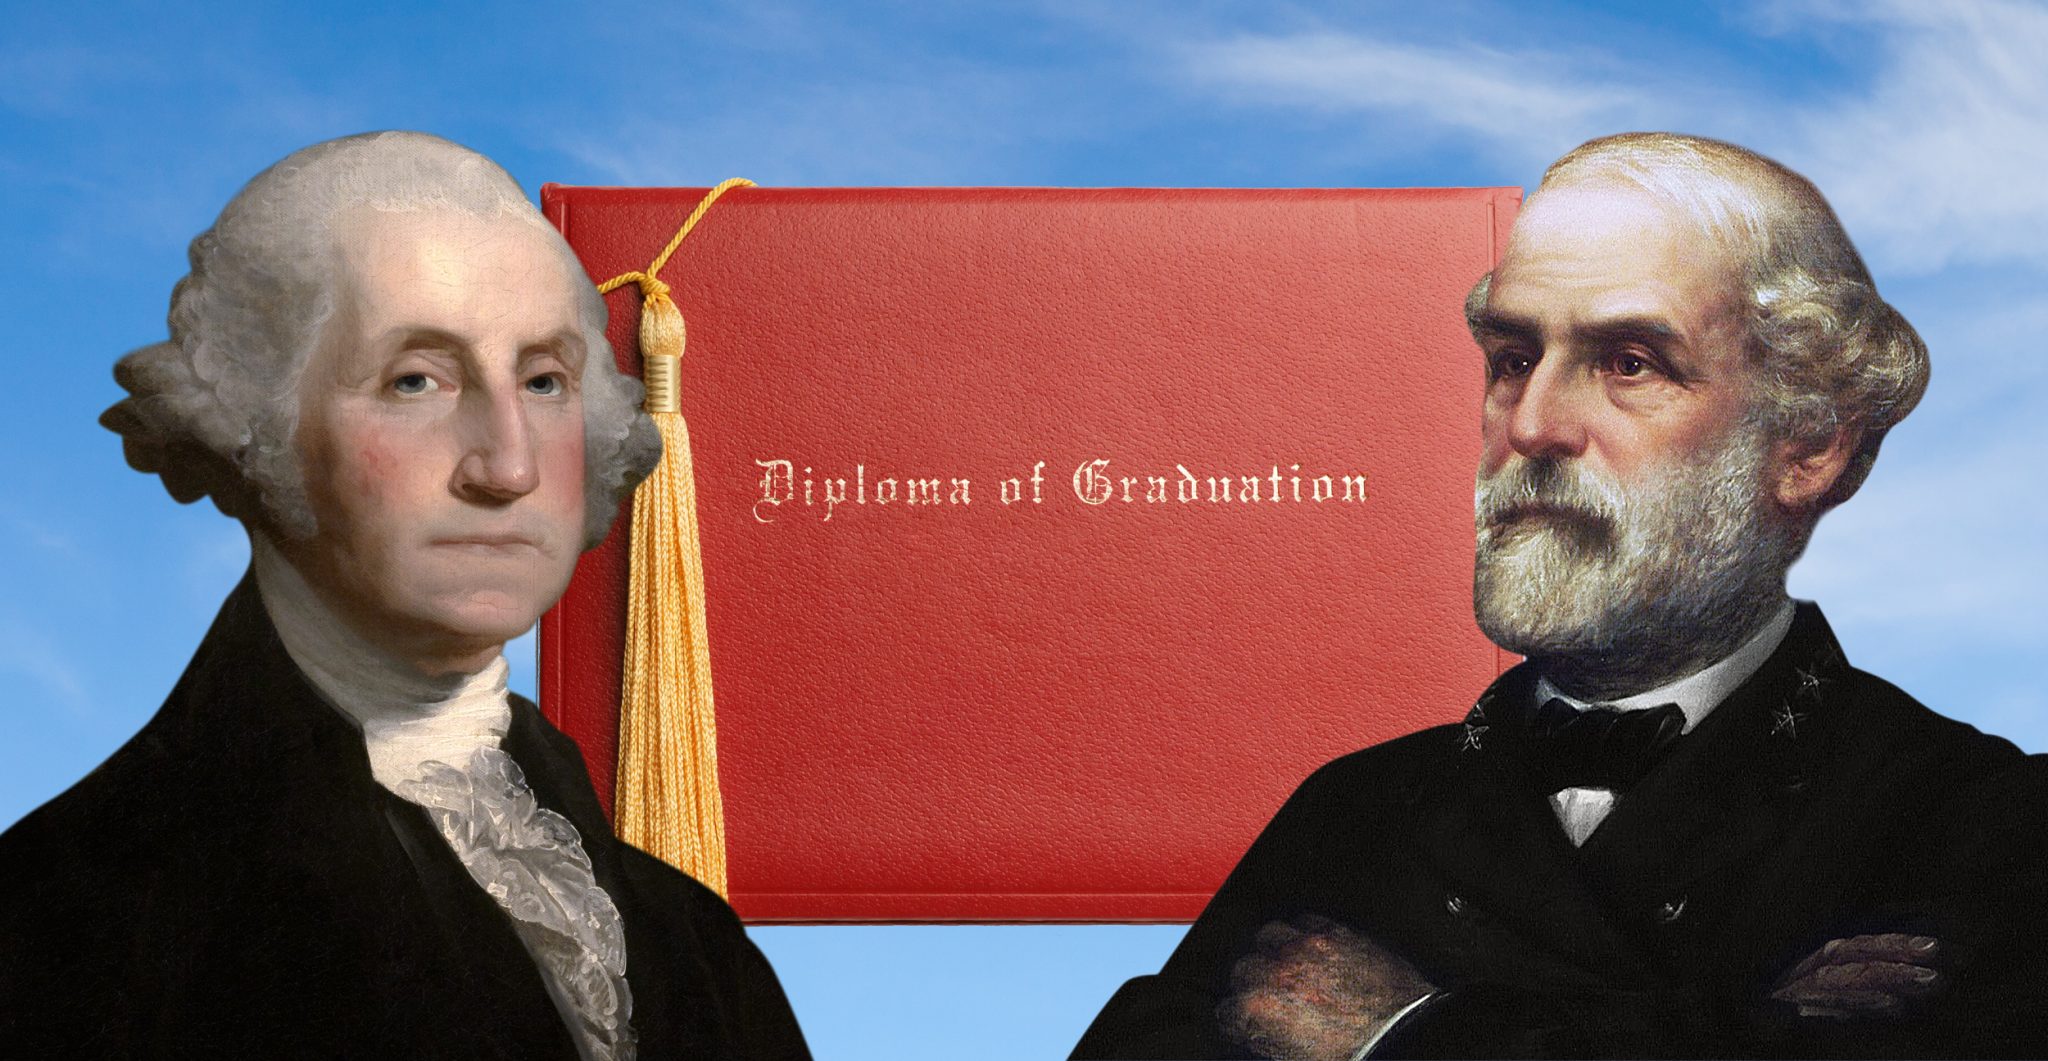 George Washington and Robert E. Lee